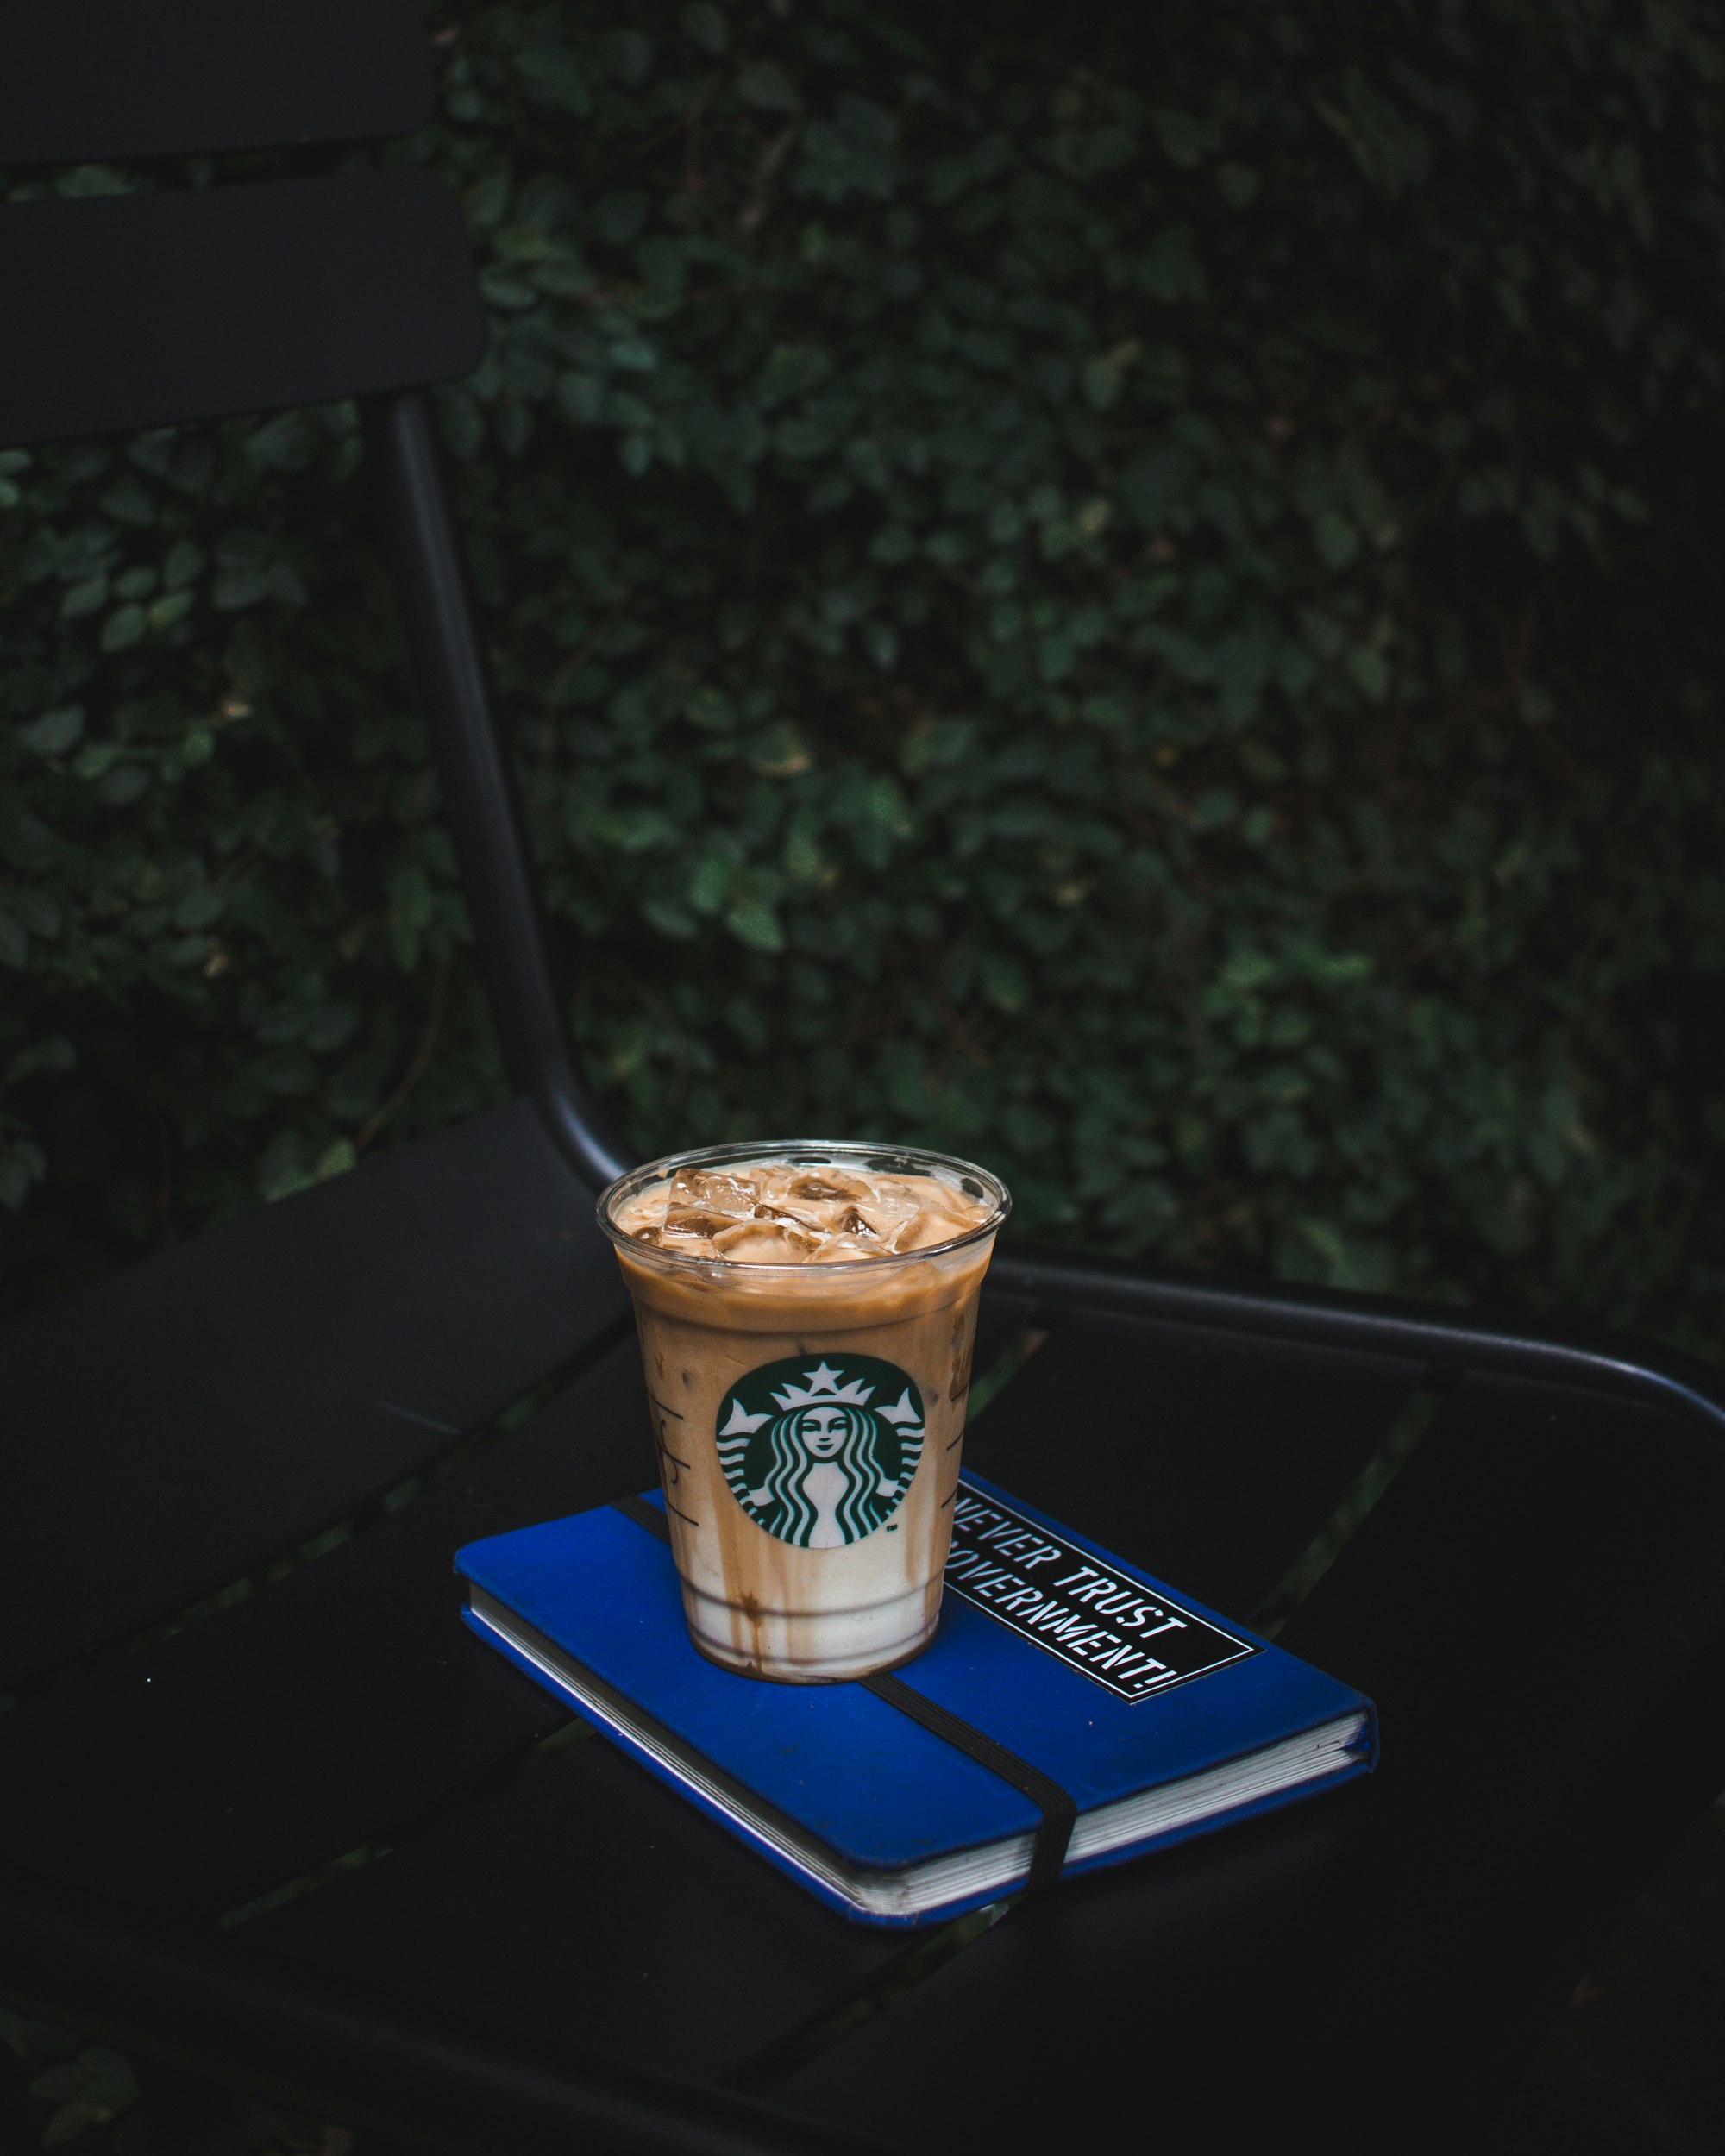 Starbucks plastic cup on blue book